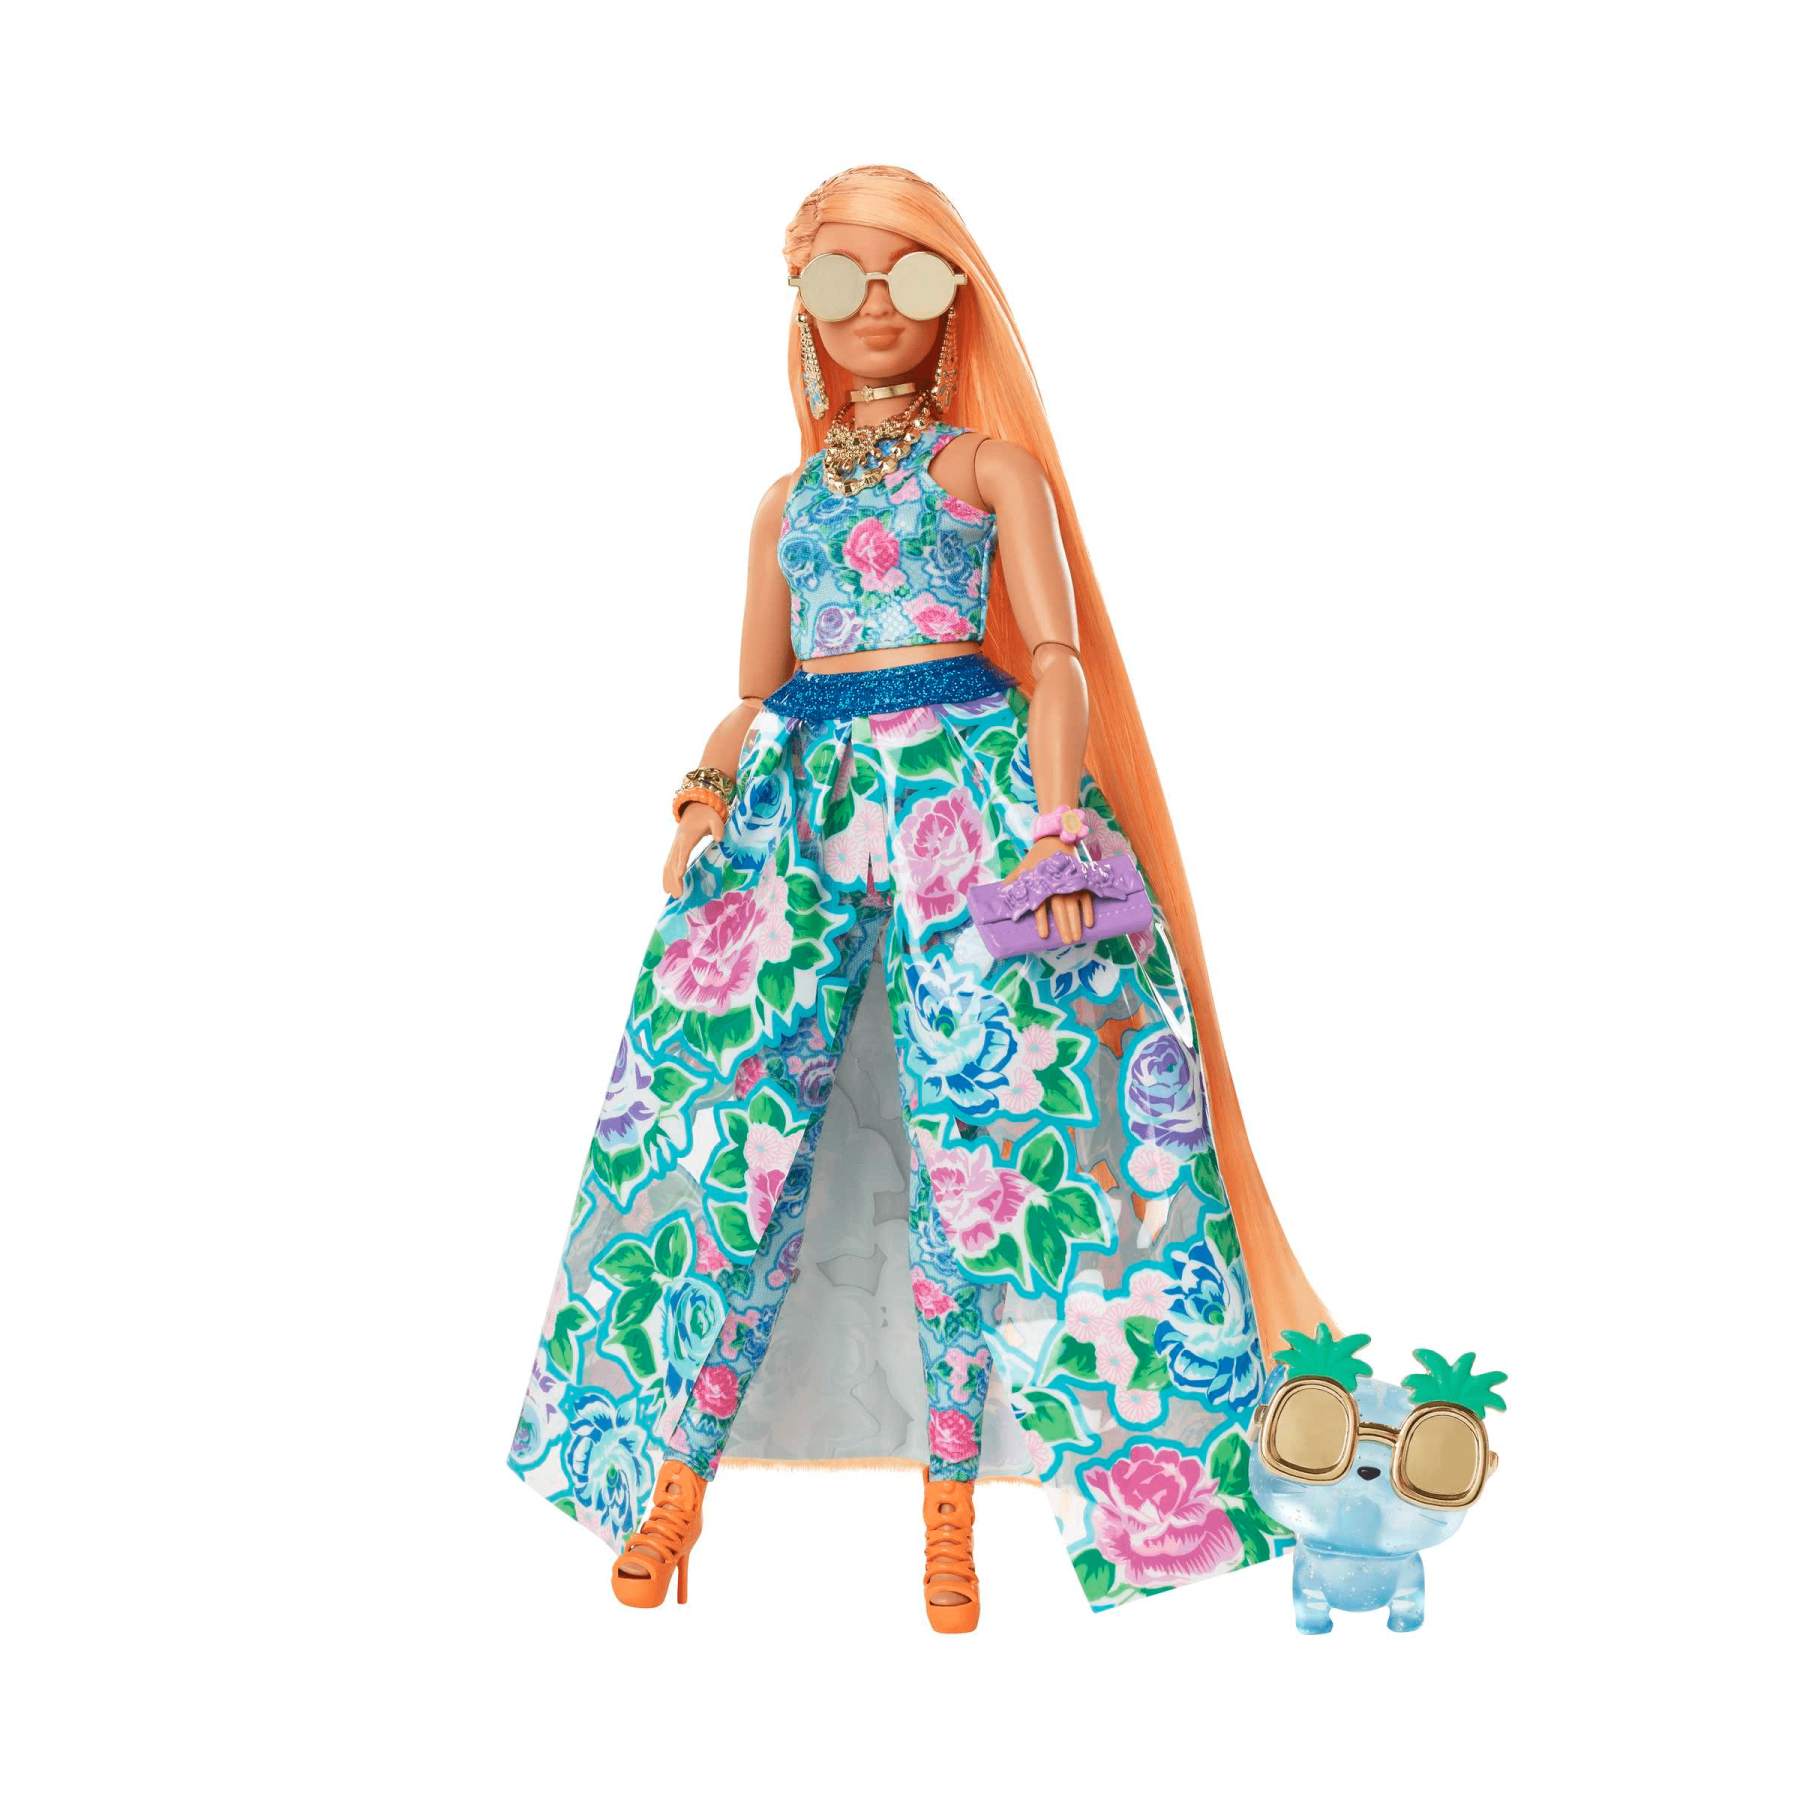 Barbie extra fancy, bambola curvy con completo floreale da 2 pezzi